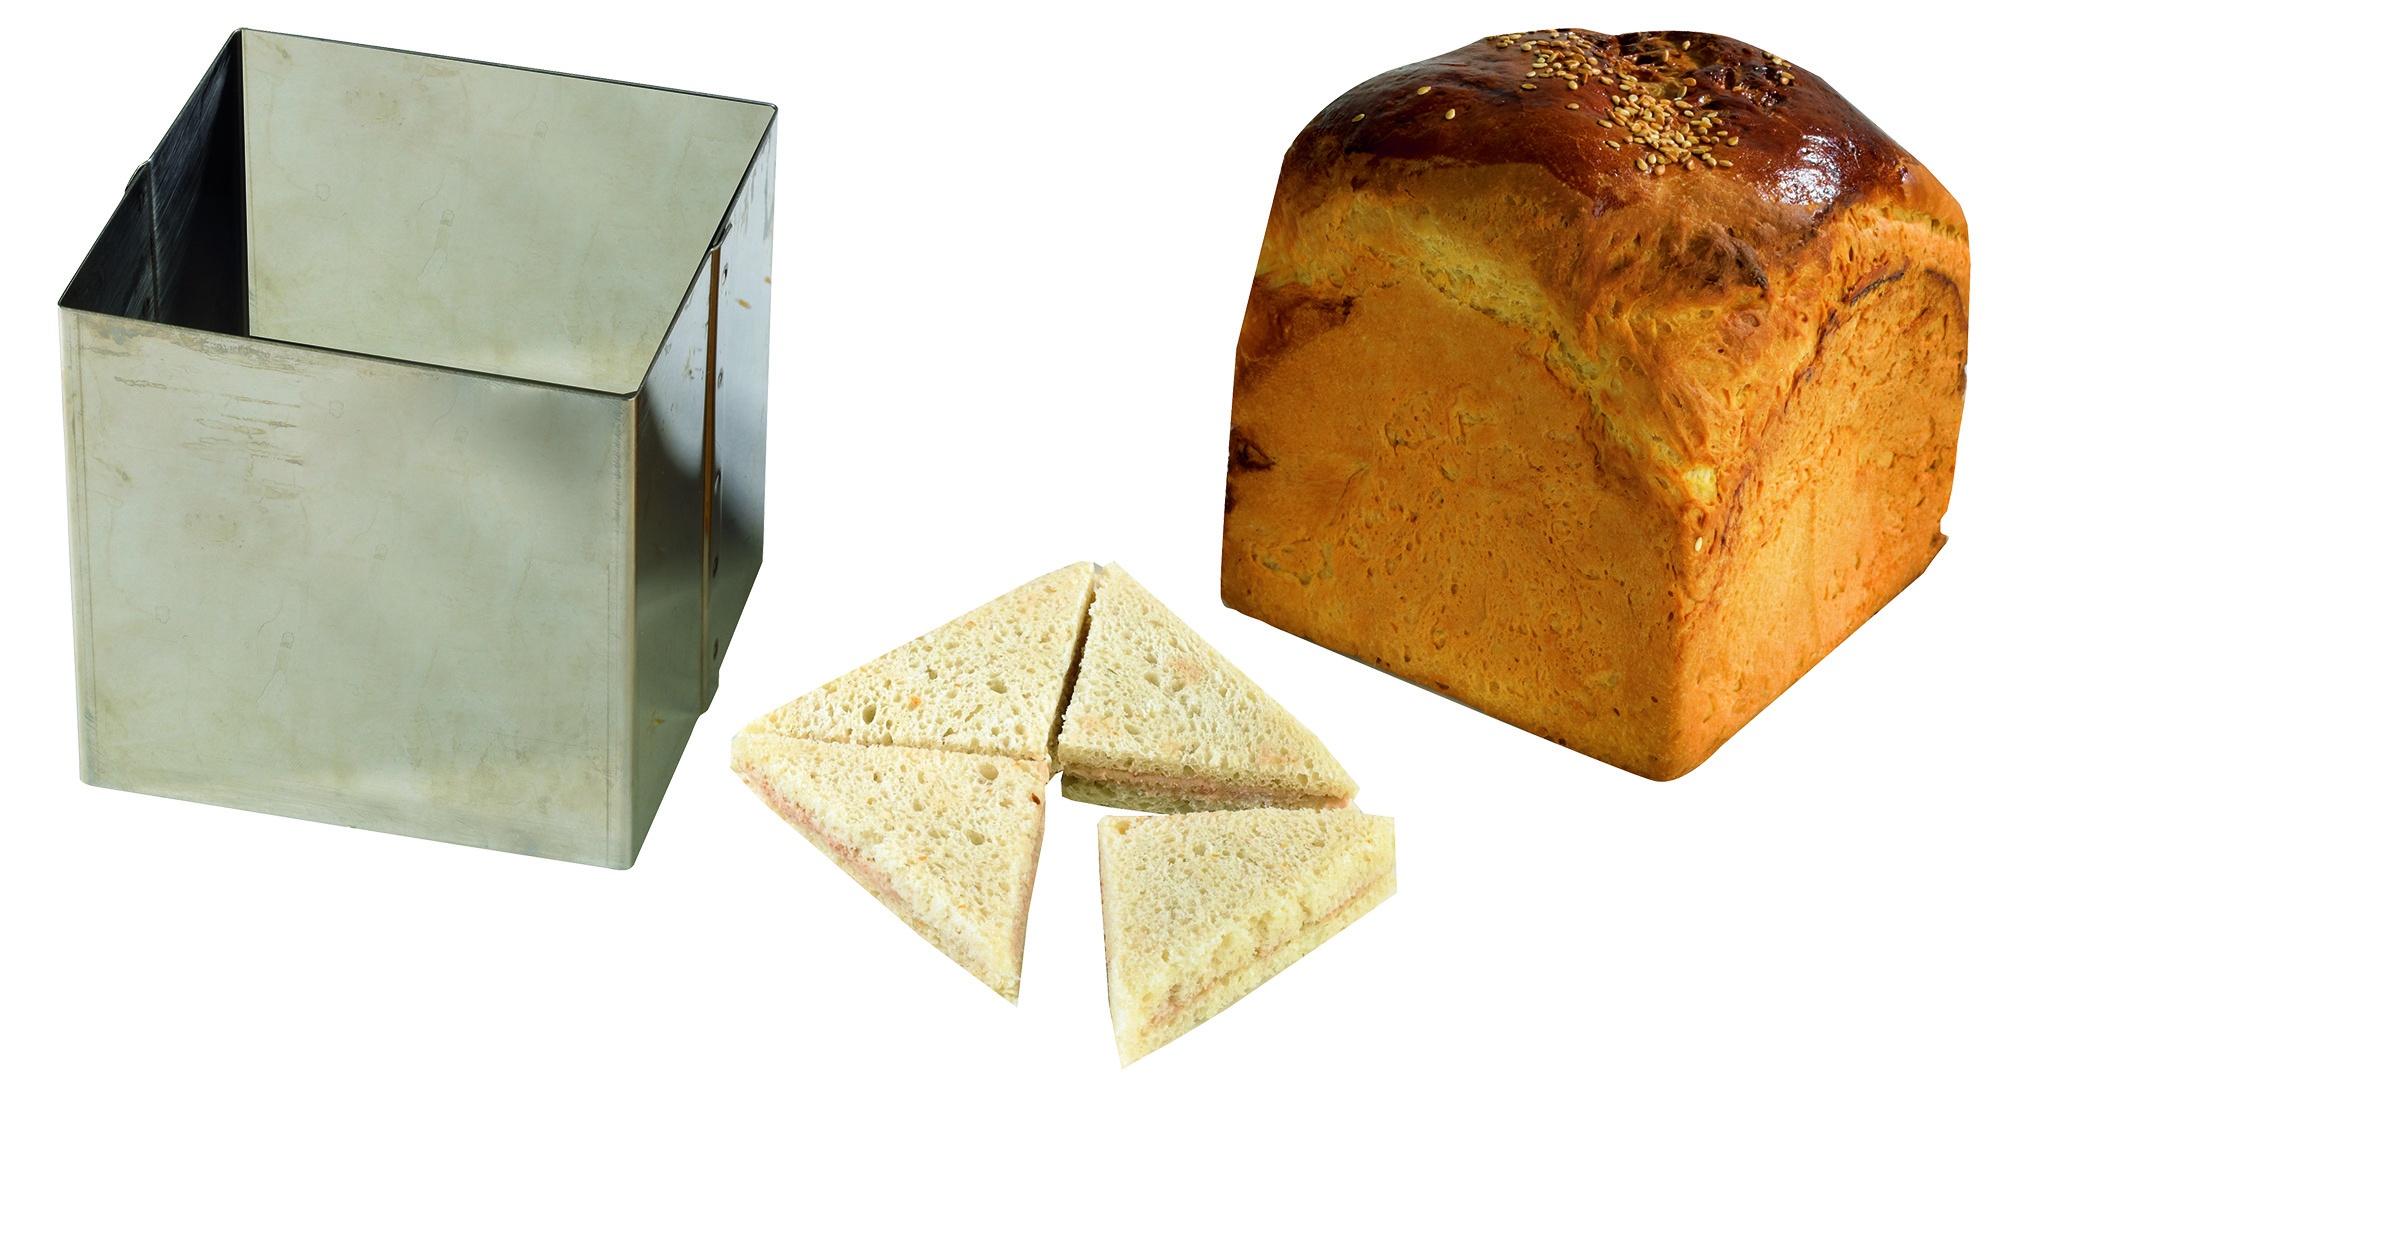 Bread Molds